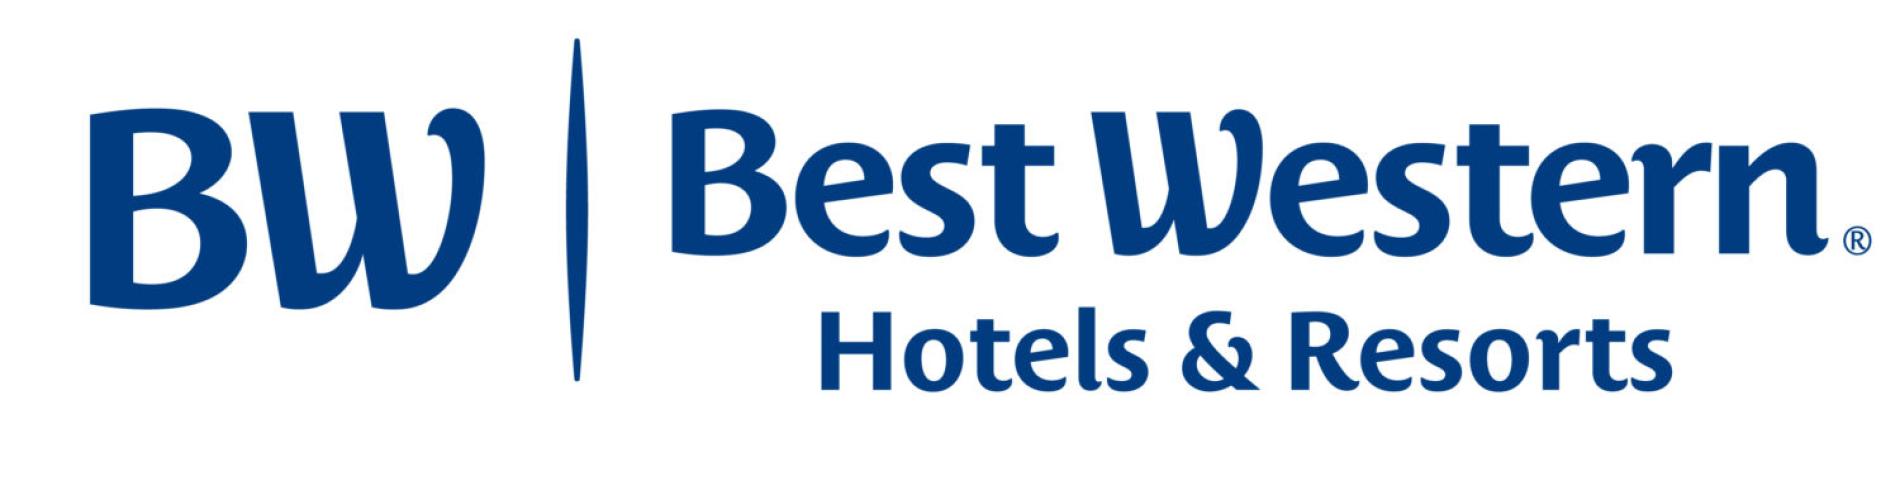 Hotel Best Western à Bedée